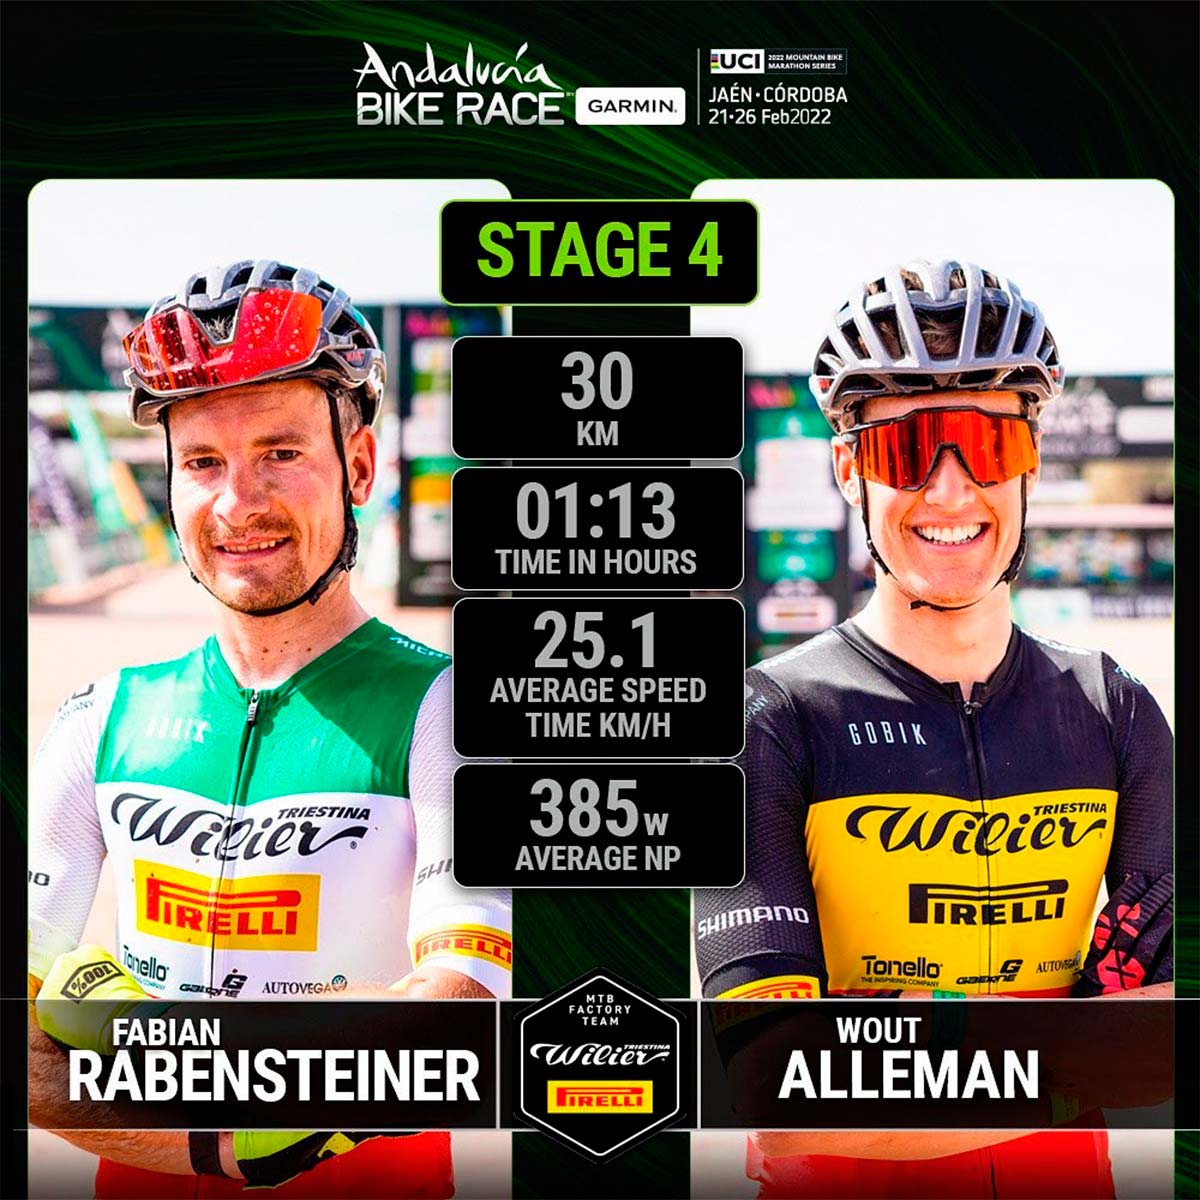 En TodoMountainBike: Andalucía Bike Race 2022: Alleman-Rabensteiner y Wakefield-Luthi repiten victoria en la cuarta etapa